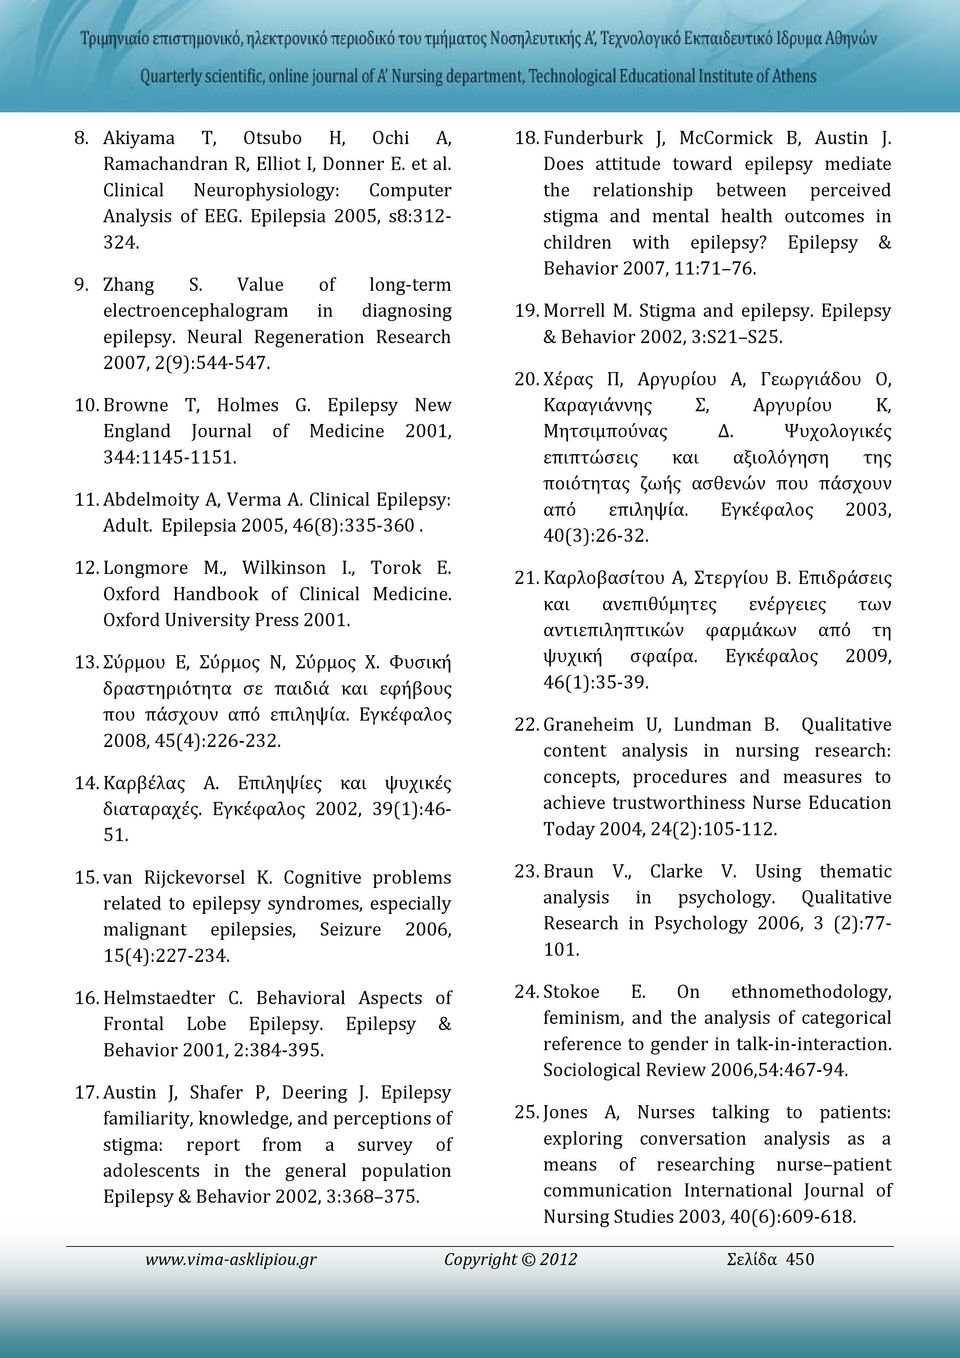 11. Abdelmoity A, Verma A. Clinical Epilepsy: Adult. Epilepsia 2005, 46(8):335-360. 12. Longmore M., Wilkinson I., Torok E. Oxford Handbook of Clinical Medicine. Oxford University Press 2001. 13.